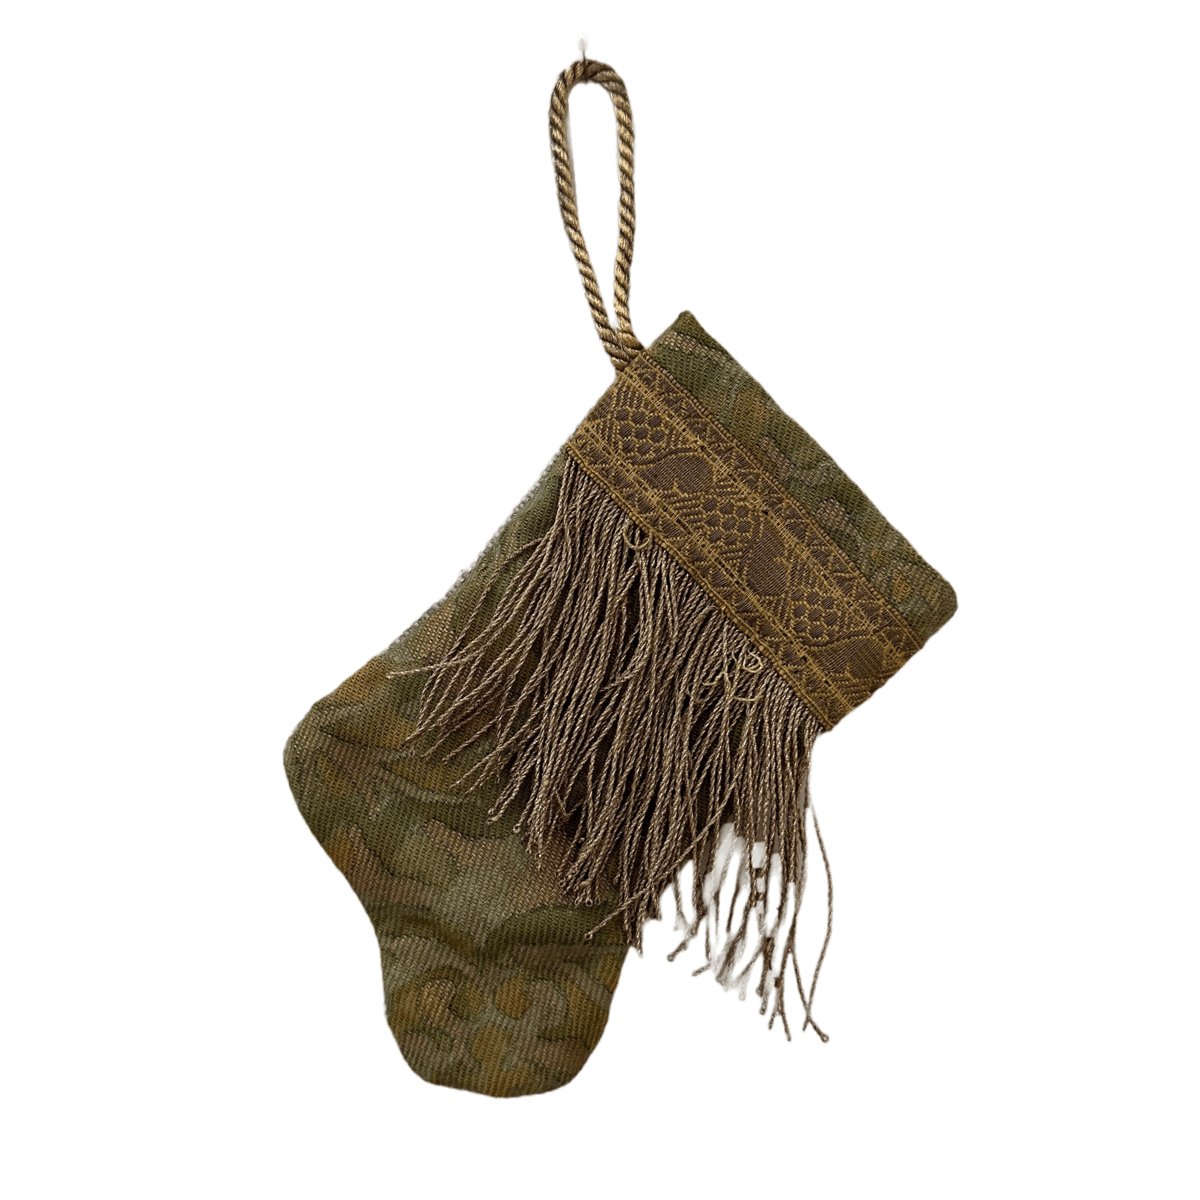 Handmade Mini Stocking Ornament from Antique & Vintage Textiles, Trims | Green Fortuny Ornament B. Viz Design C 